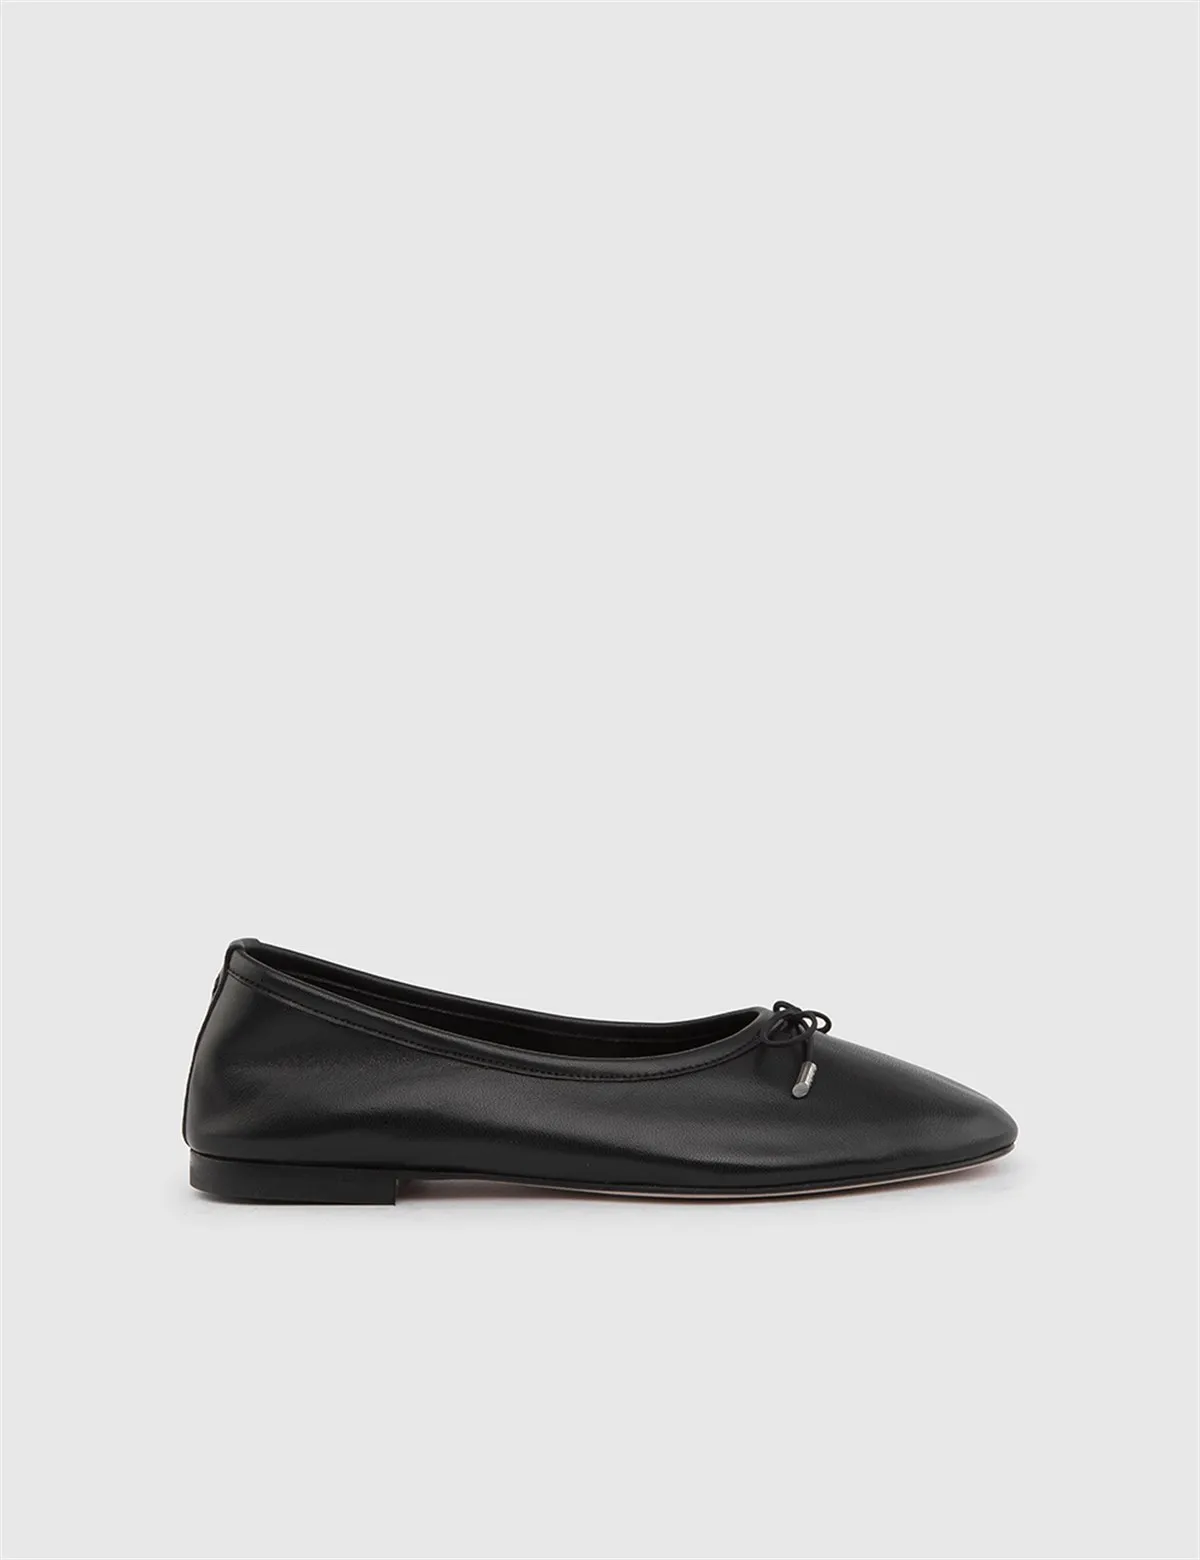 

ILVi-Genuine Leather Handmade Presov Black Leather Women's Ballerina Women's Shoes 2022 Fall/Winter